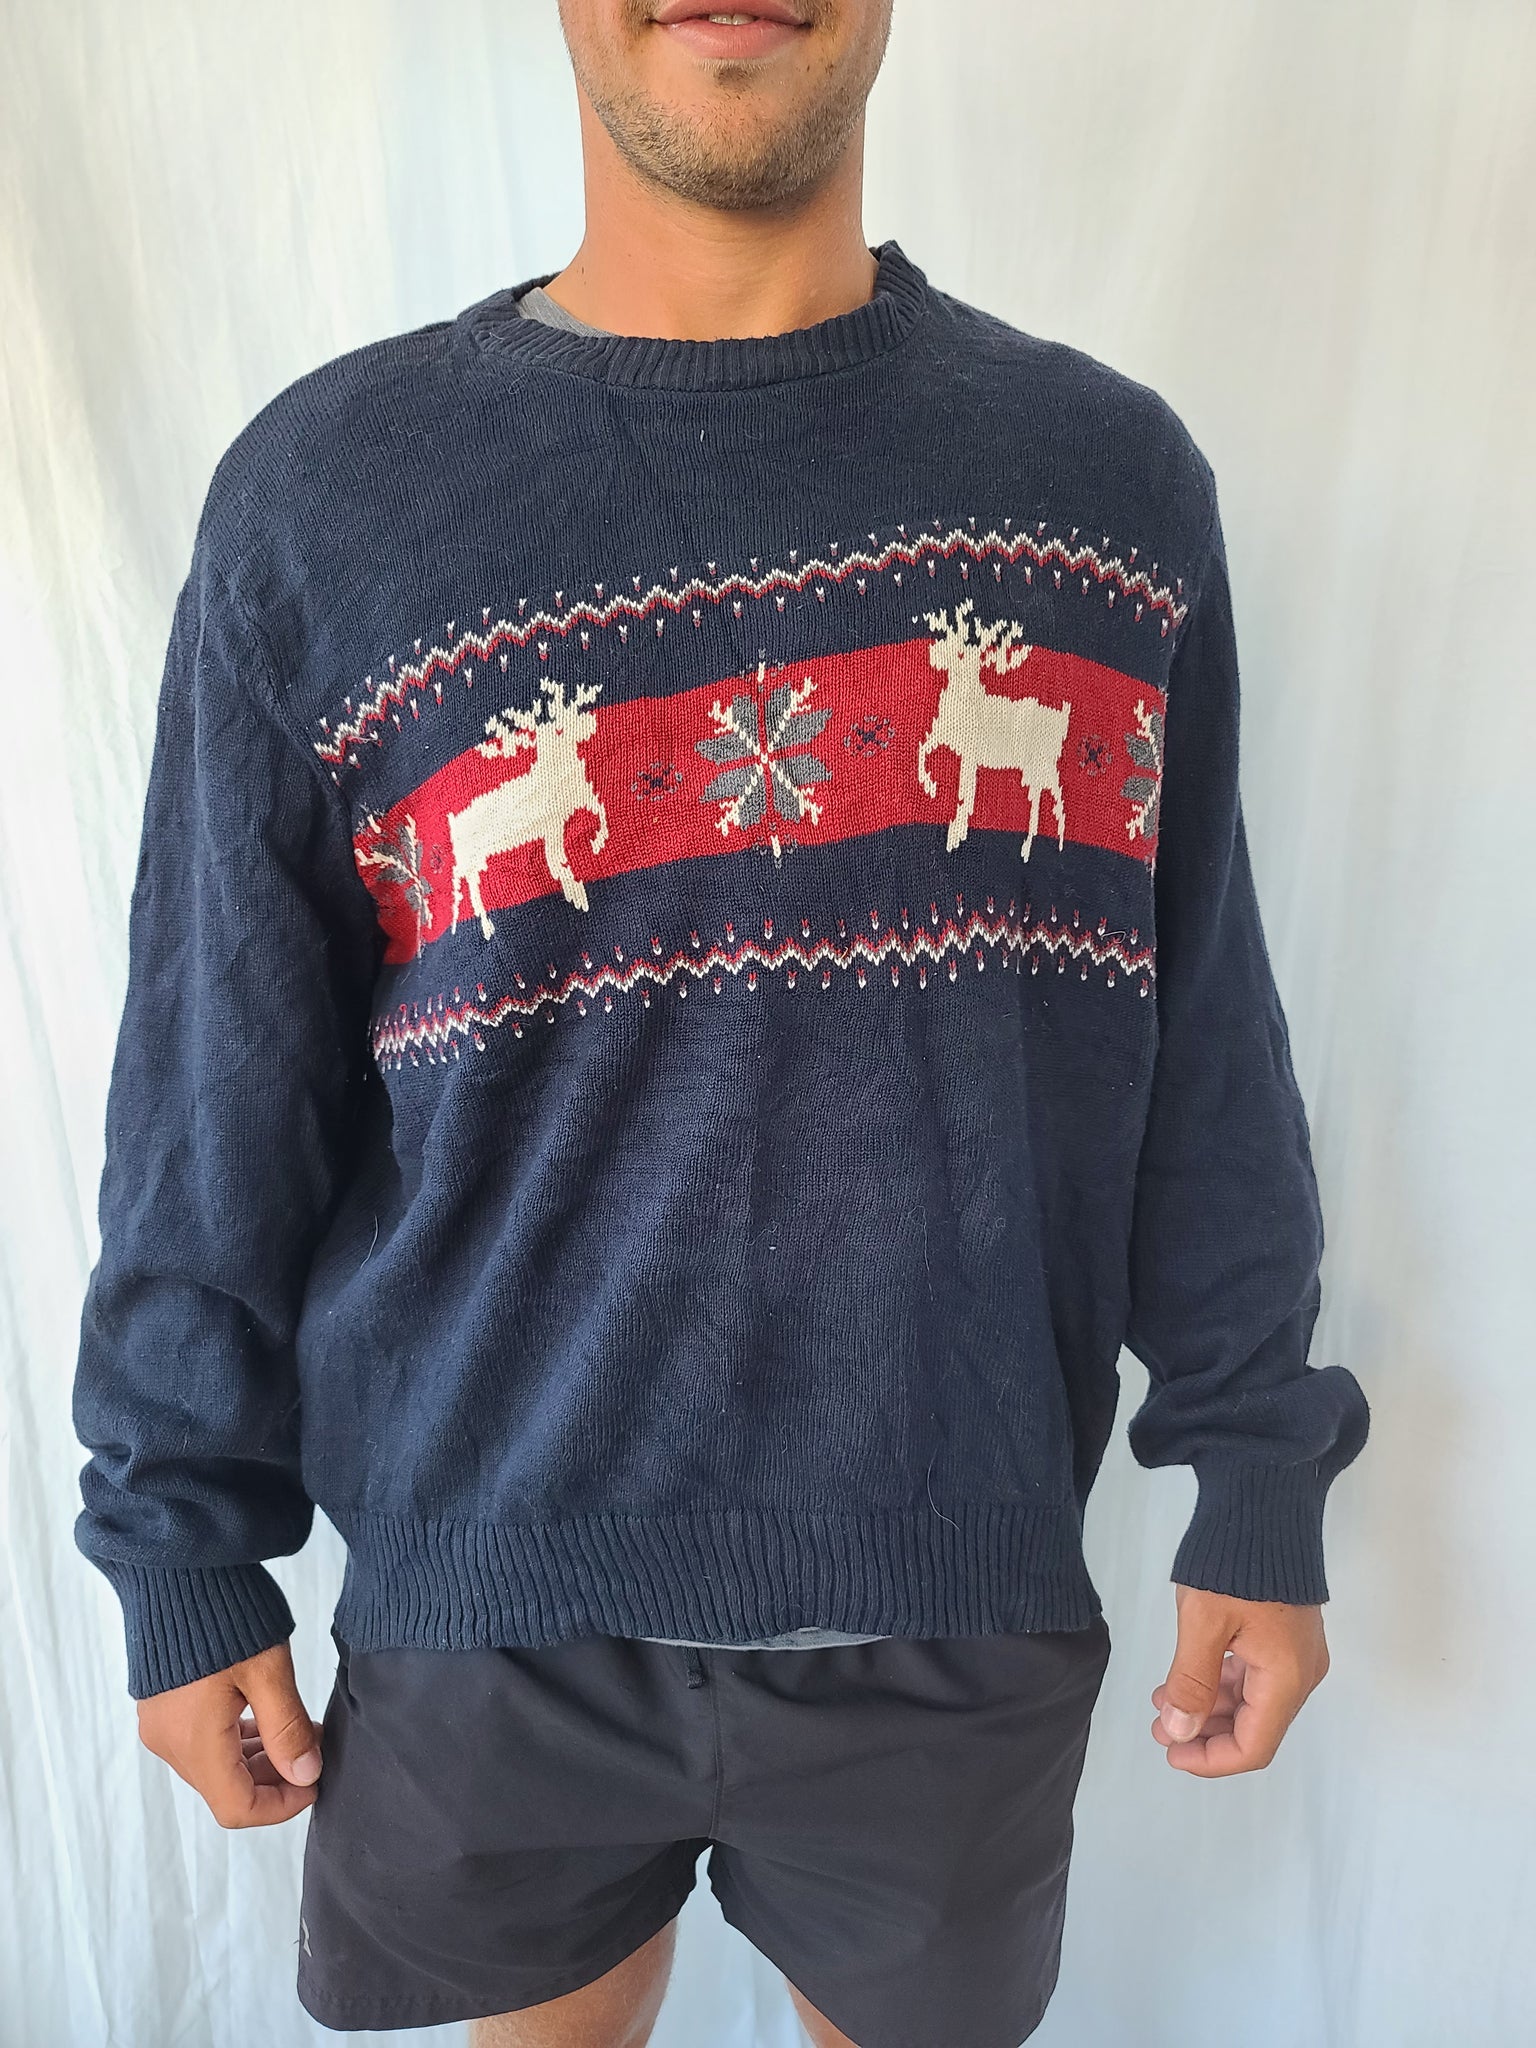 Deer and snowflake Winter Sweater